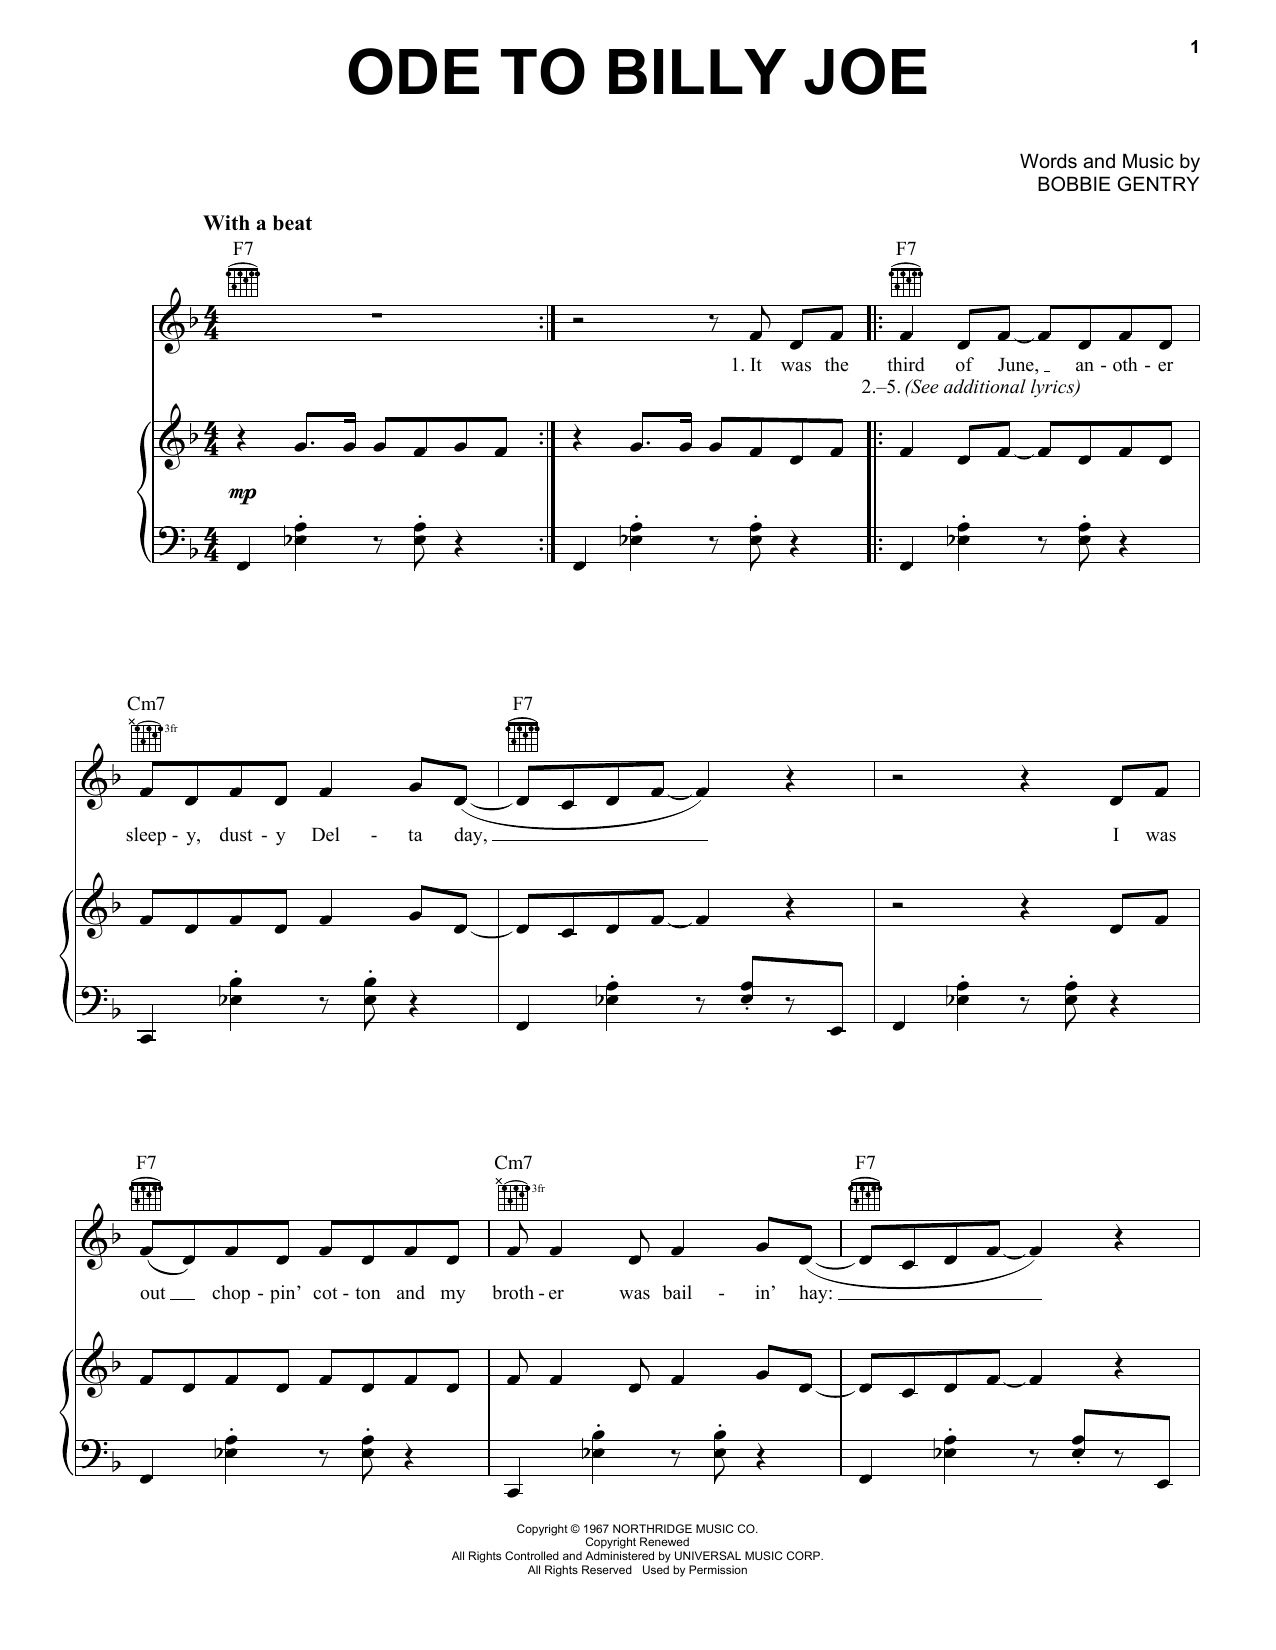 Bobbie Gentry Ode To Billy Joe Sheet Music Notes & Chords for Ukulele with strumming patterns - Download or Print PDF